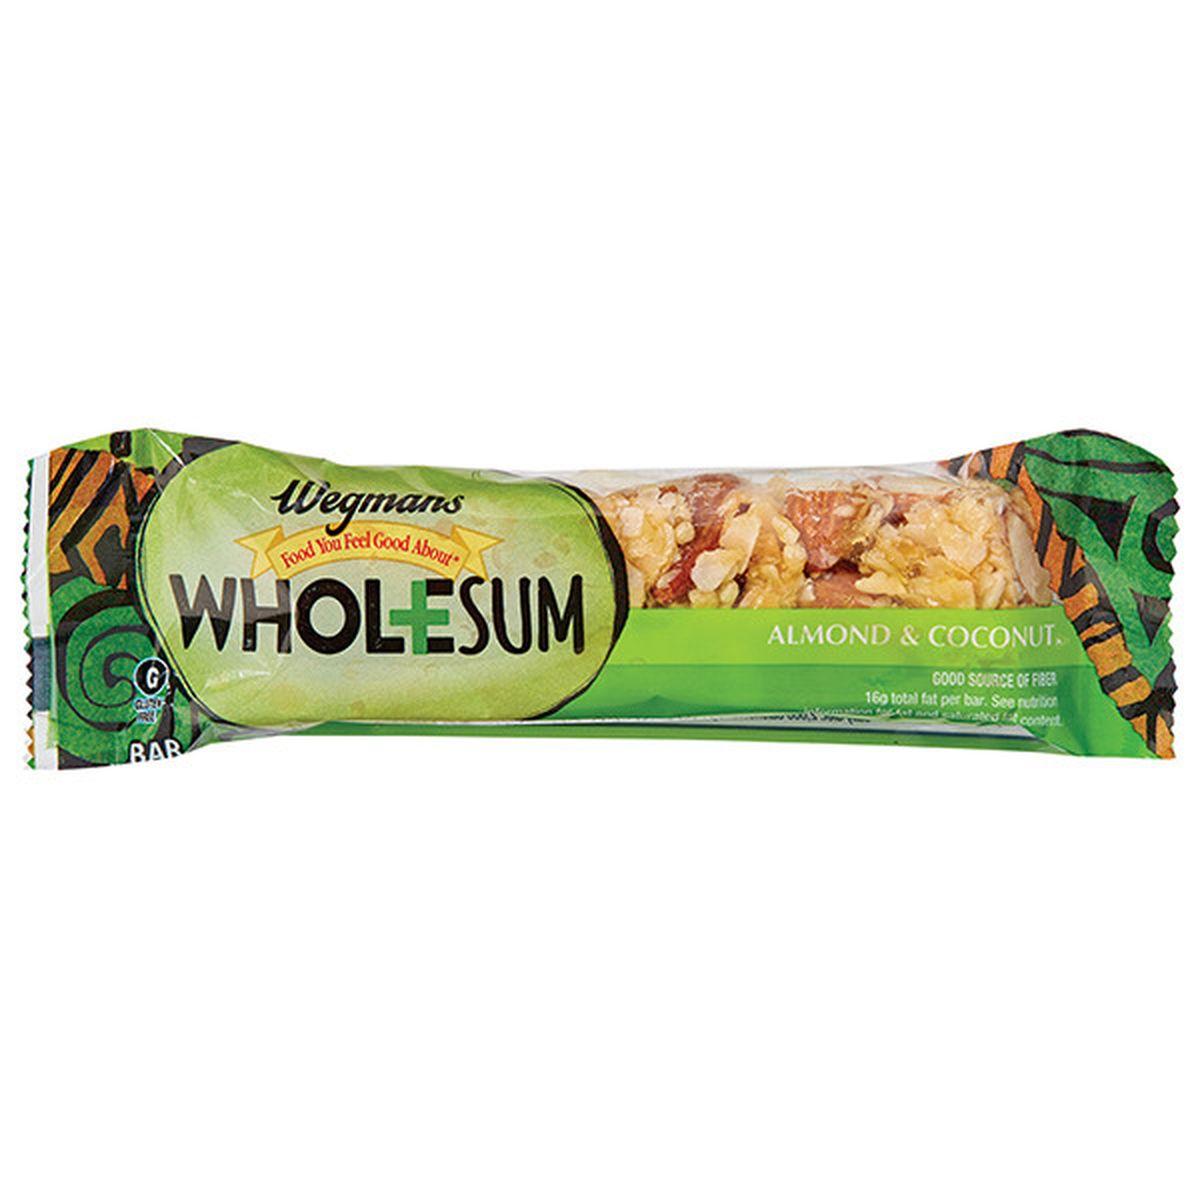 Calories in Wegmans Almond & Coconut Wholesum Bar